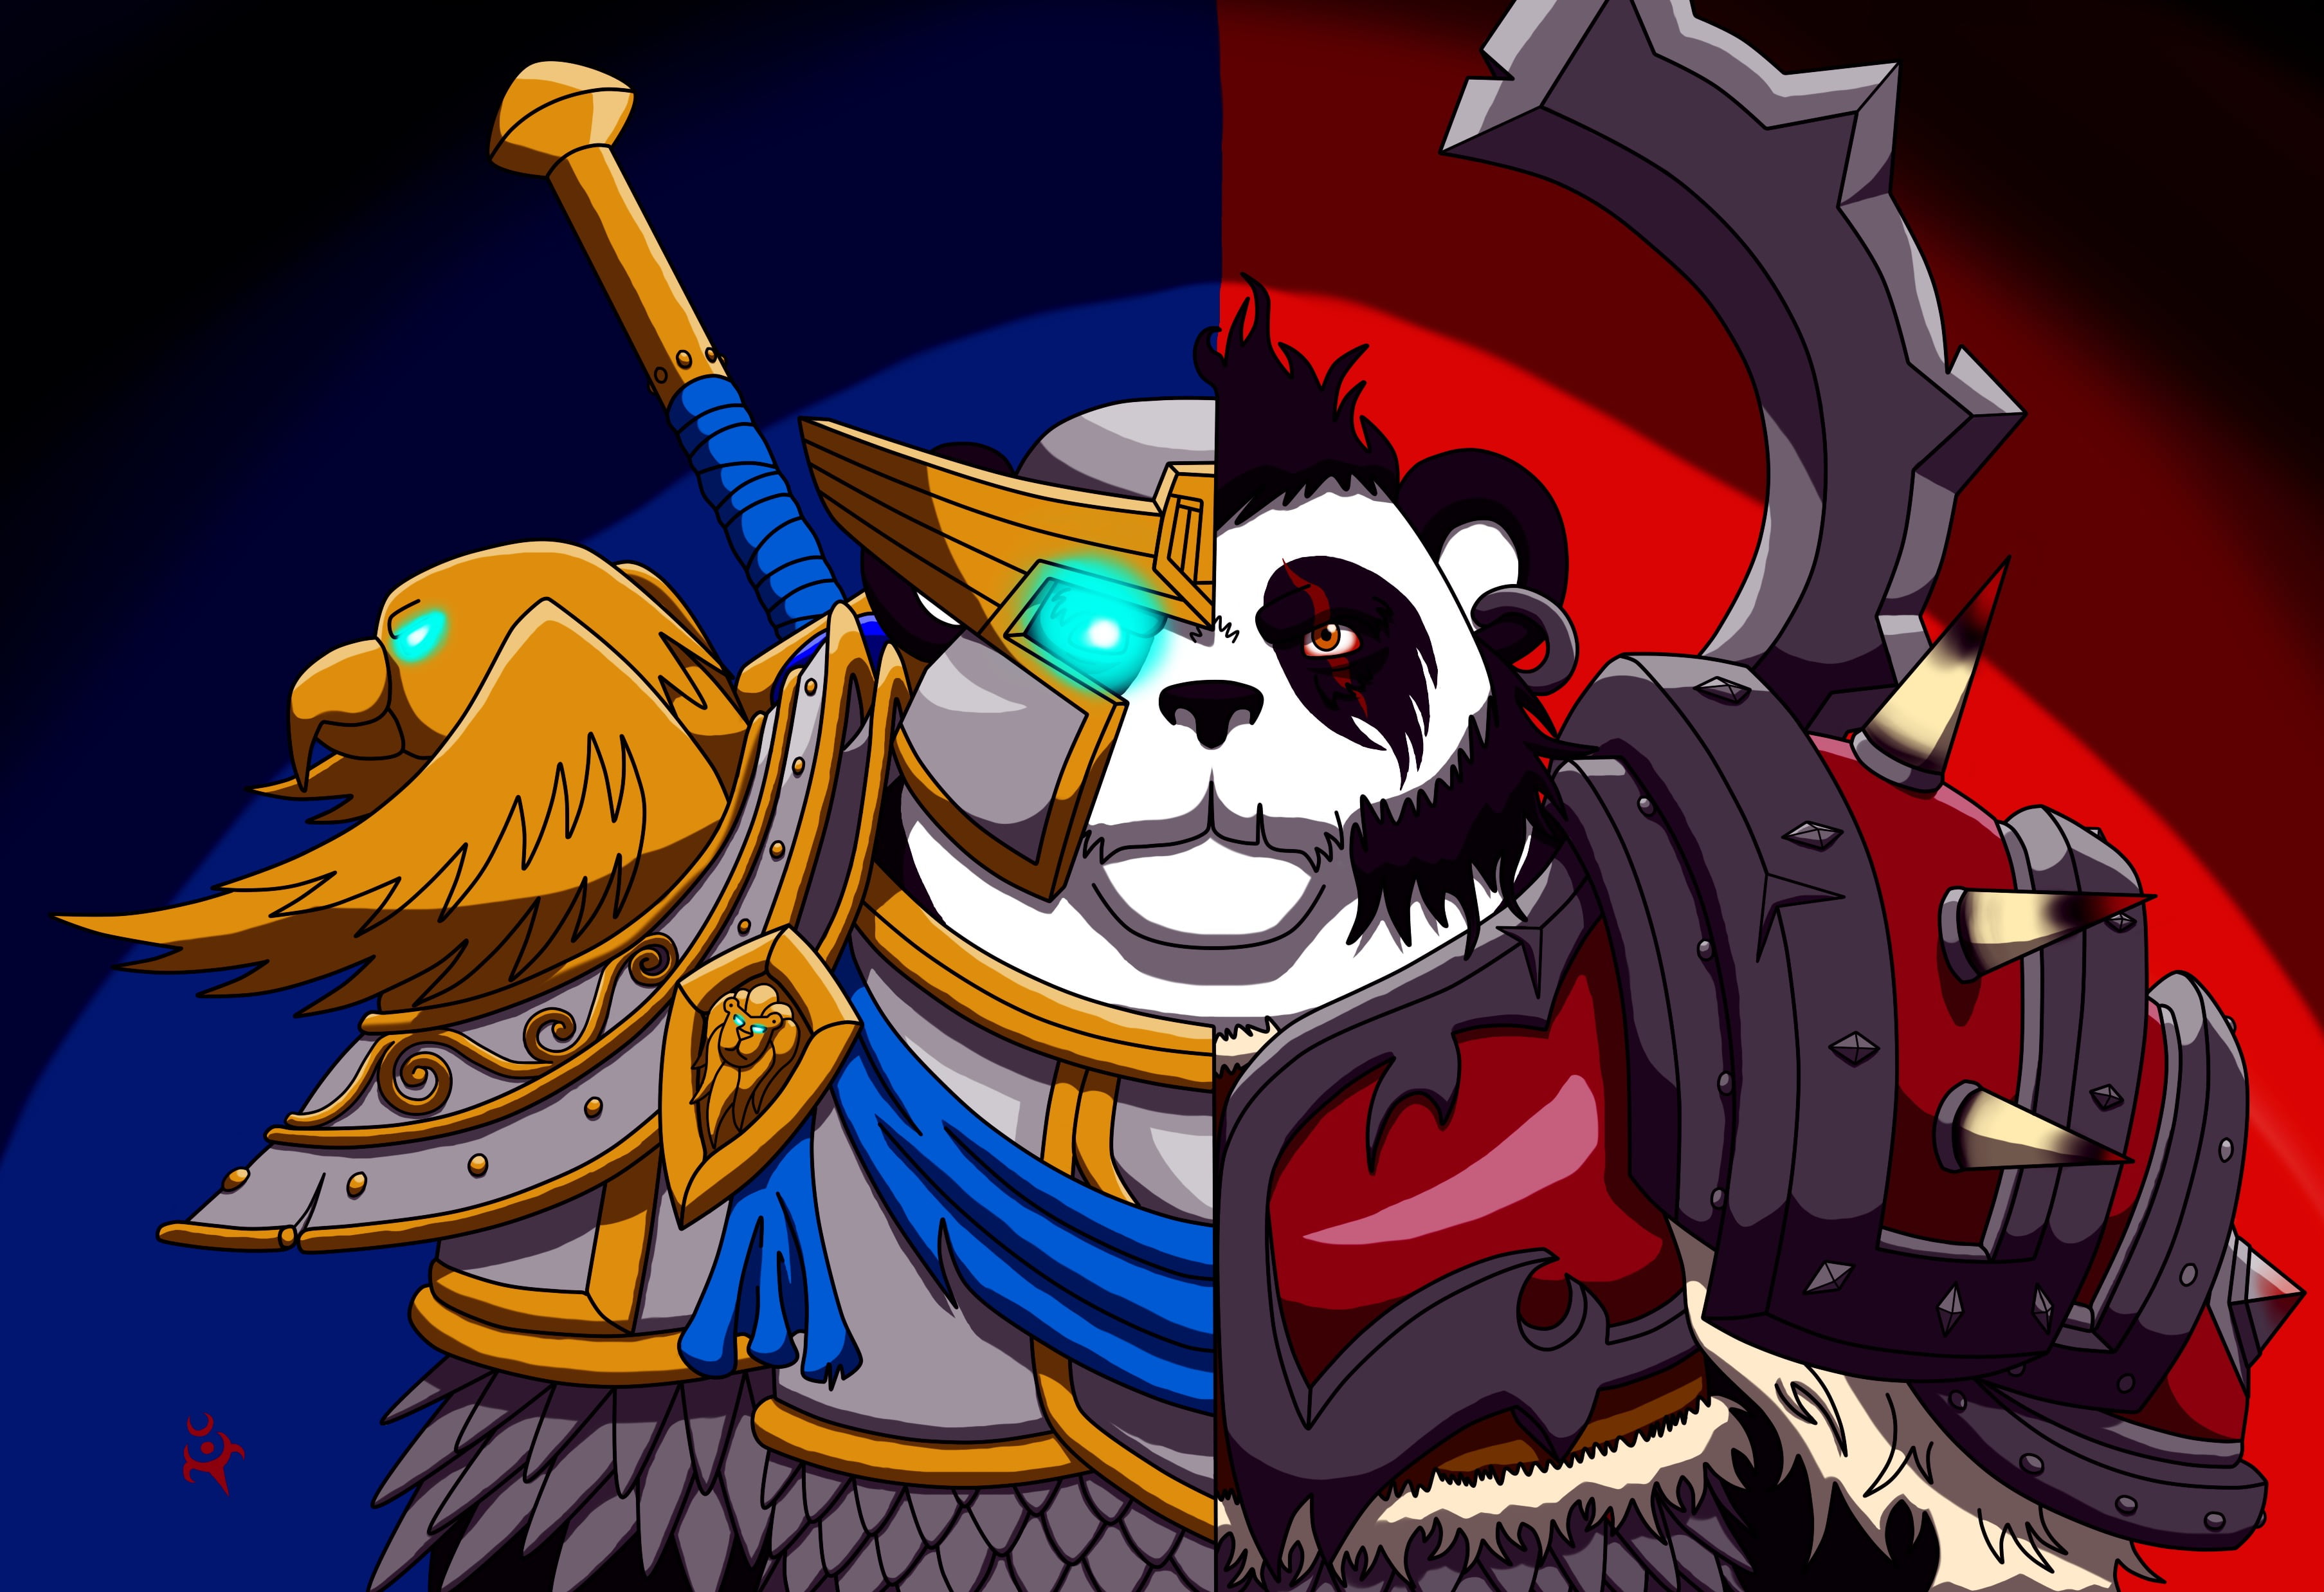 warrior panda digital wallpaper, world of warcraft, wow, alliance and horde